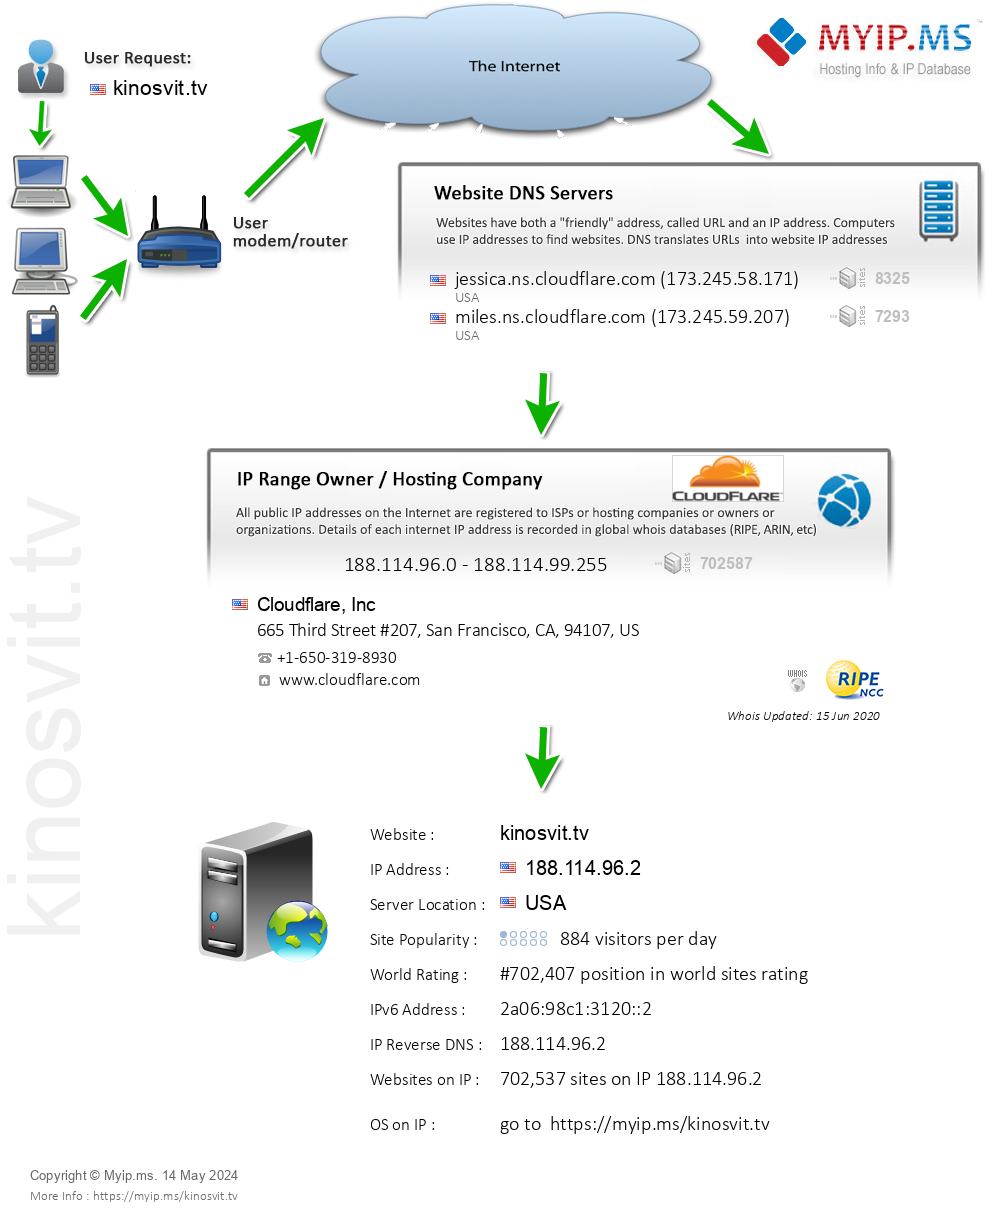 Kinosvit.tv - Website Hosting Visual IP Diagram